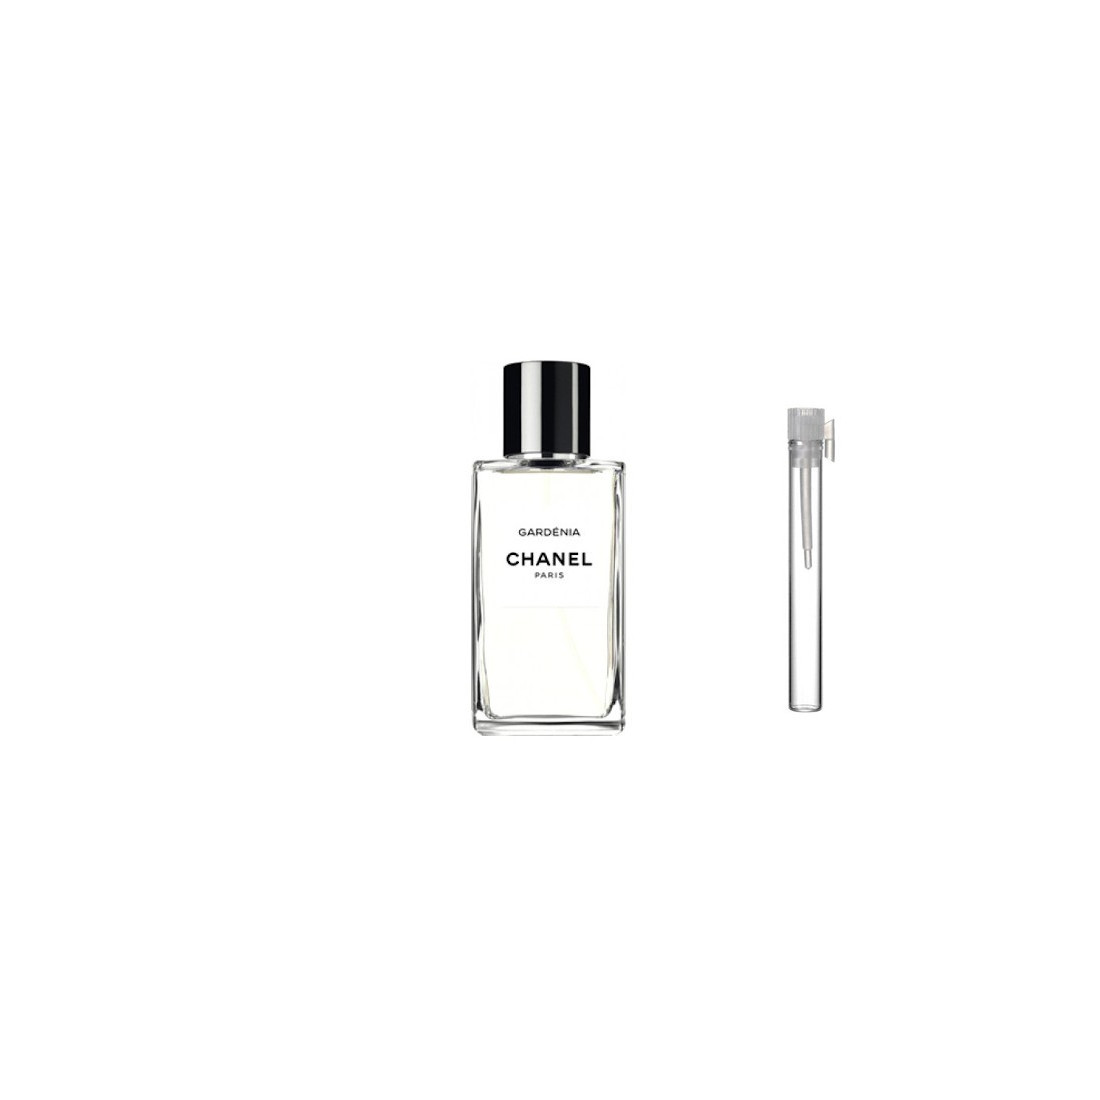 Oryginalne perfumy Chanel Gardenia Les Exclusifs de Chanel